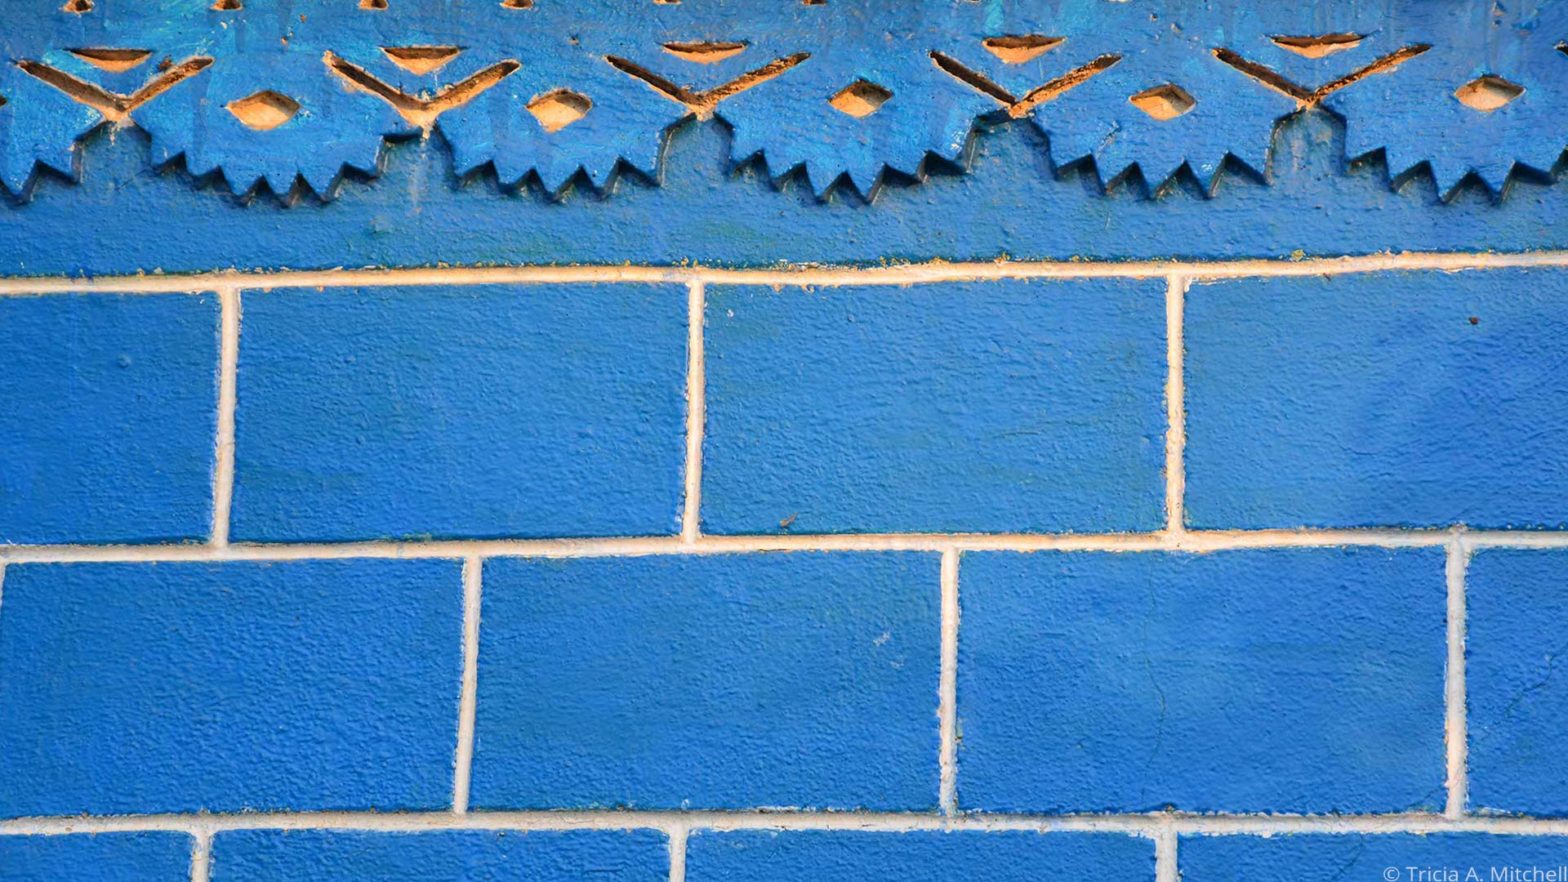 Blue bricks perfectly aligned.